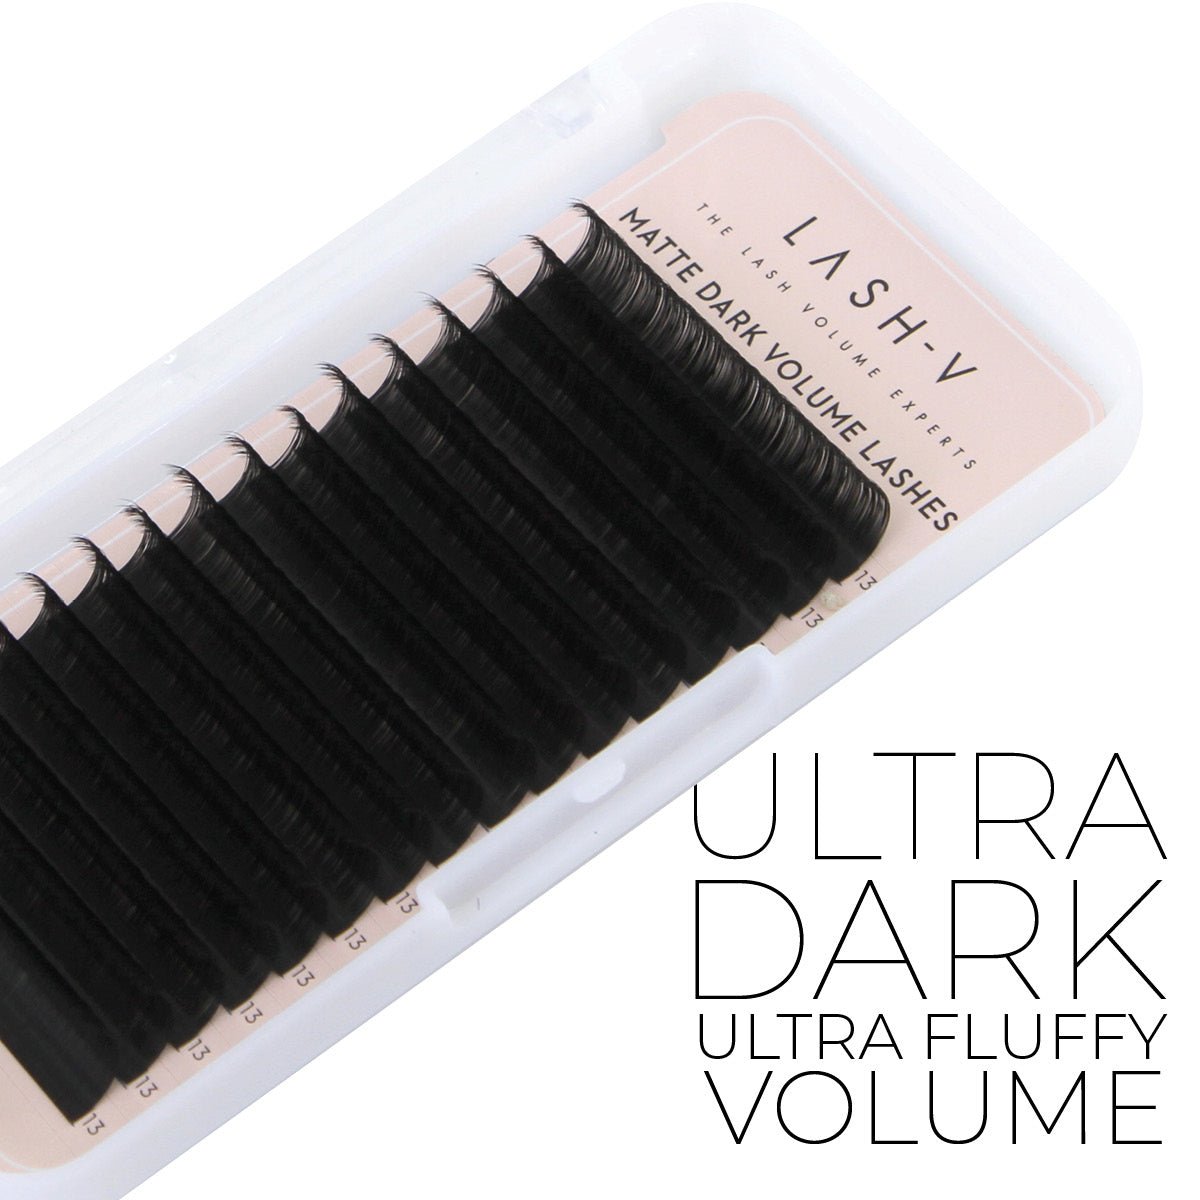 Matte Dark Volume Lashes - 0.03 - CC Curl - LASH V